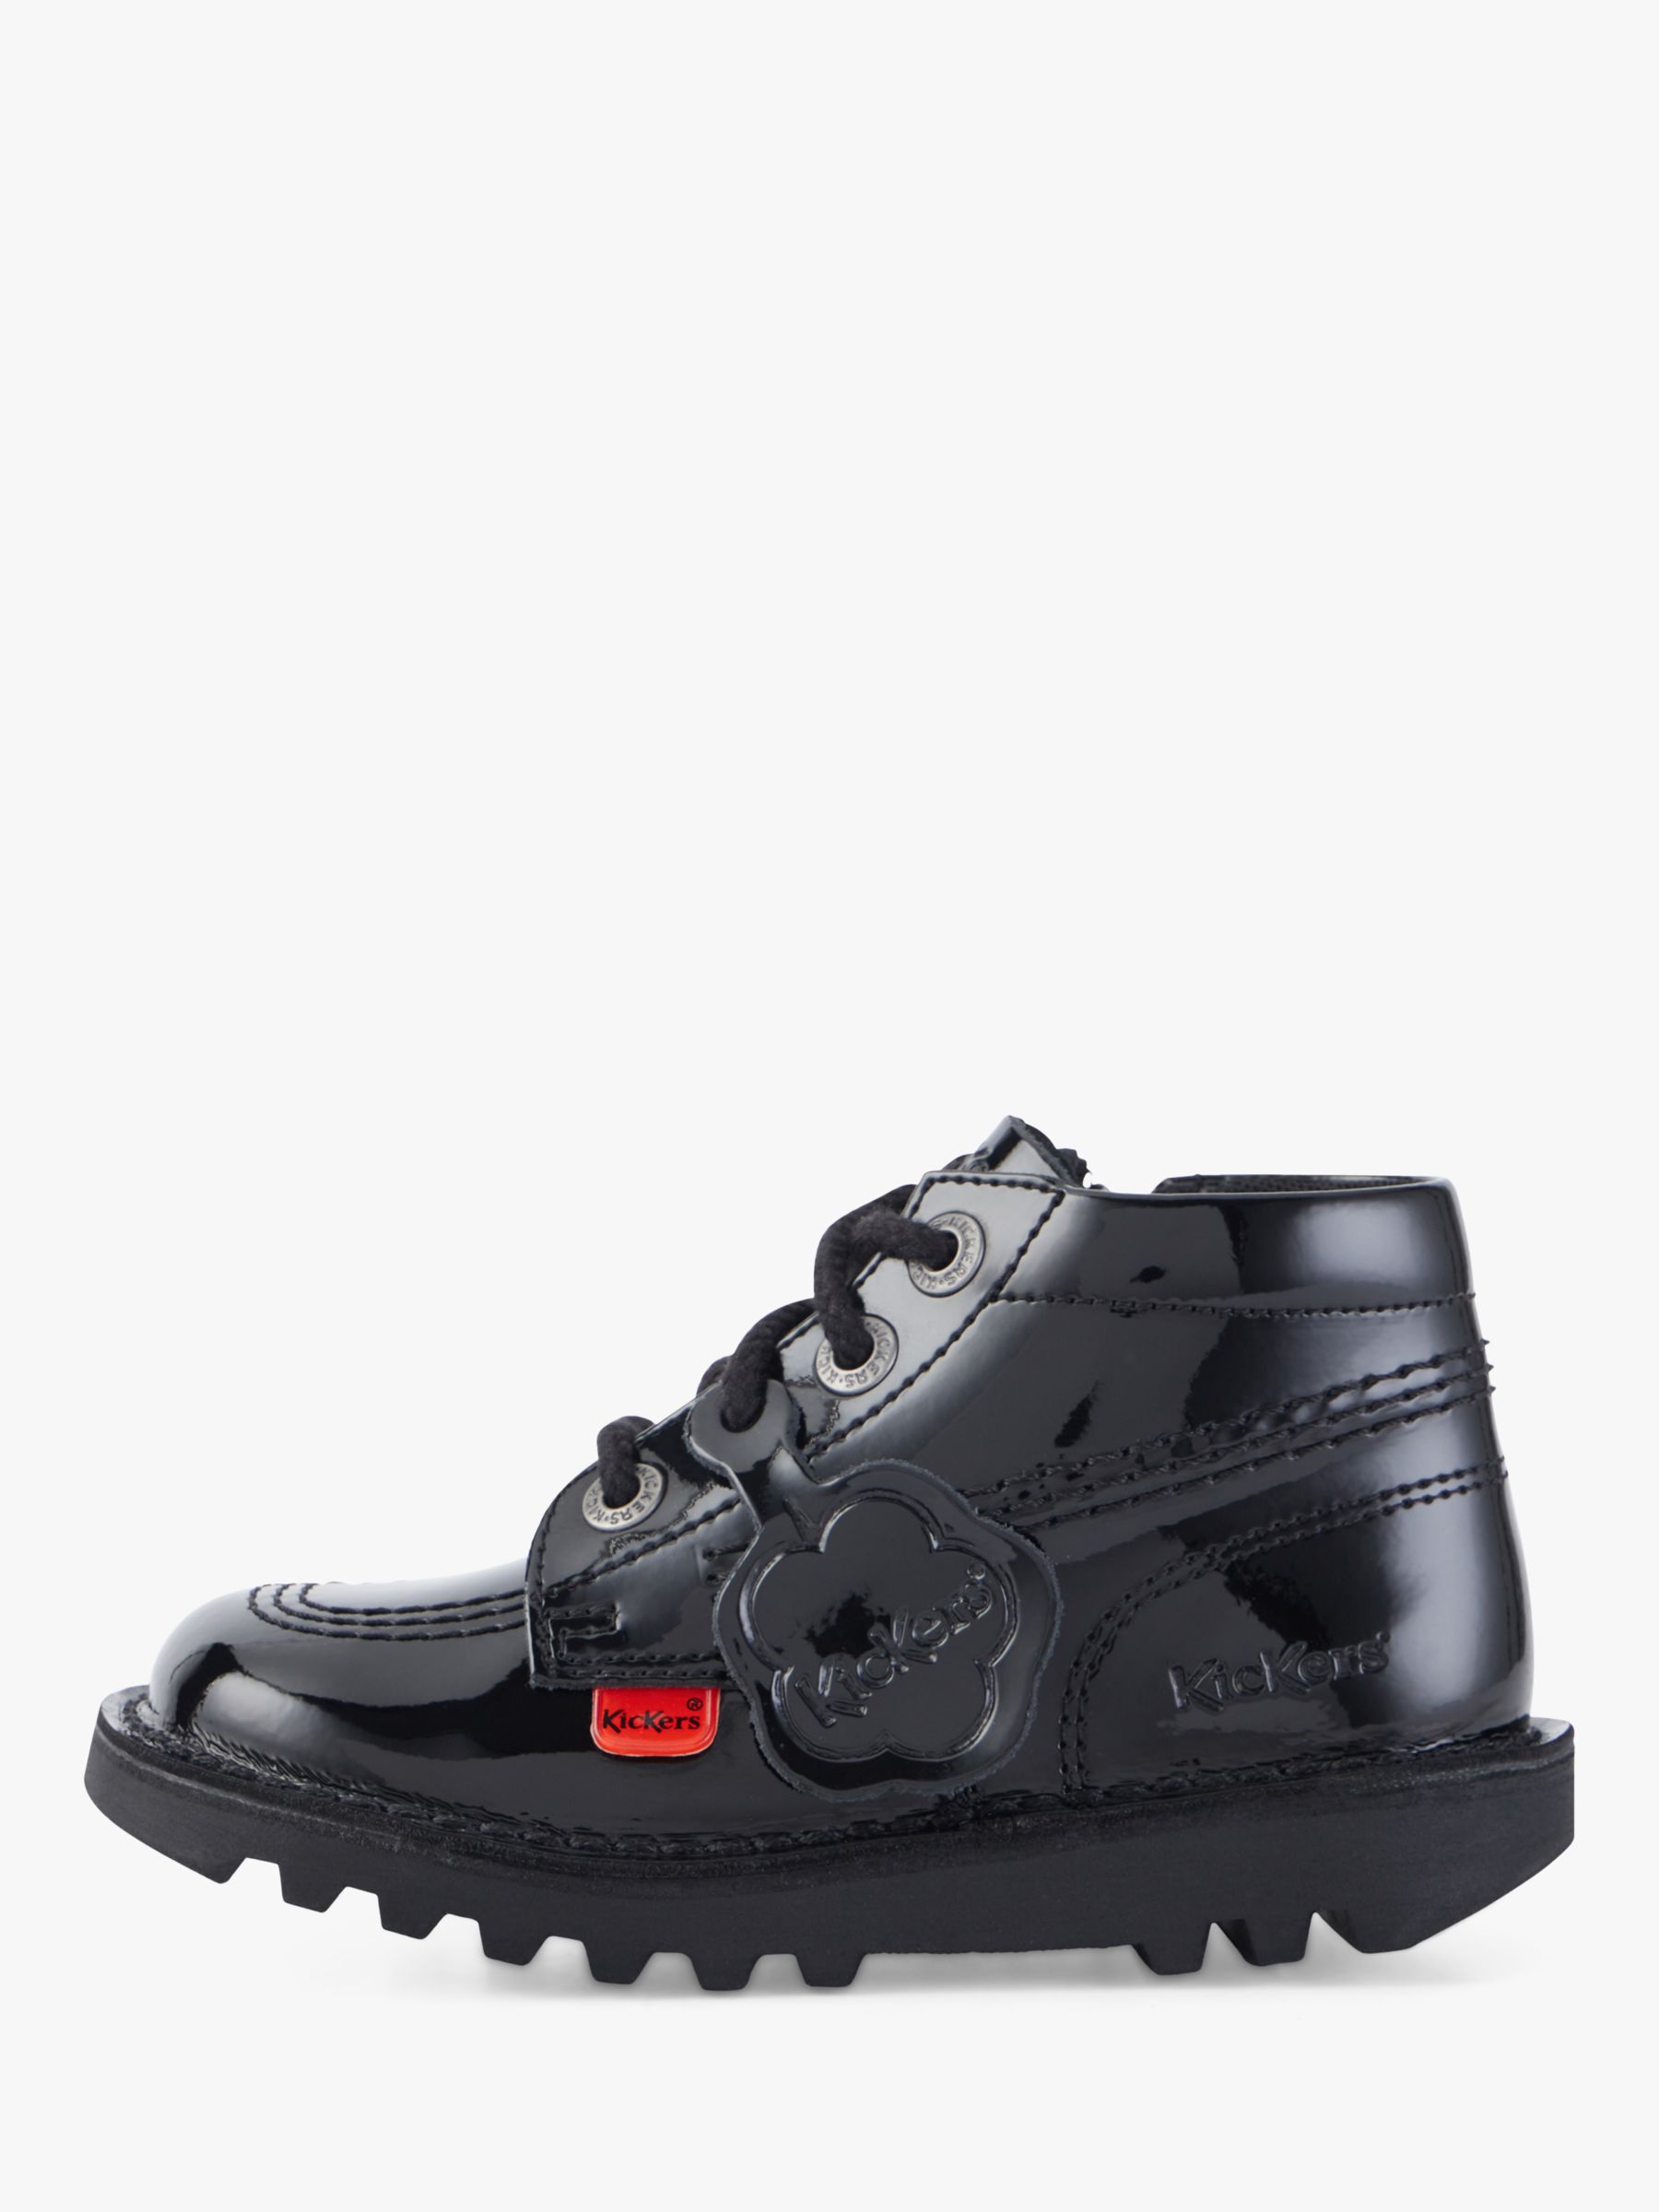 Kickers Kids' Hi Boots, Black Patent, Black Patent, 25